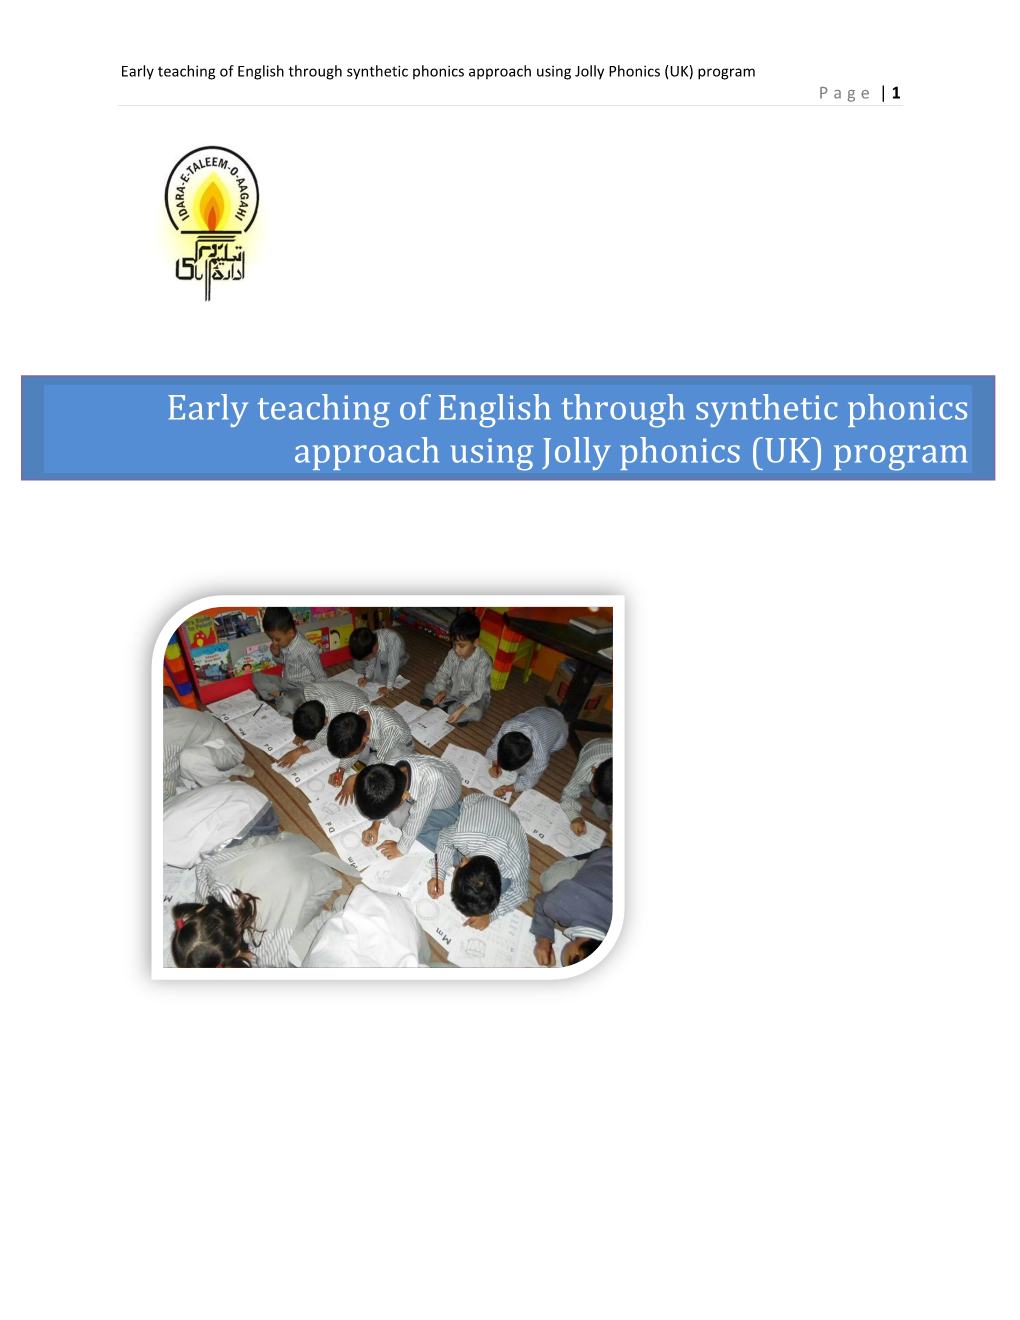 Early Teaching of English Through Synthetic Phonics Approach Using Jolly Phonics (UK) Program P a G E | 1